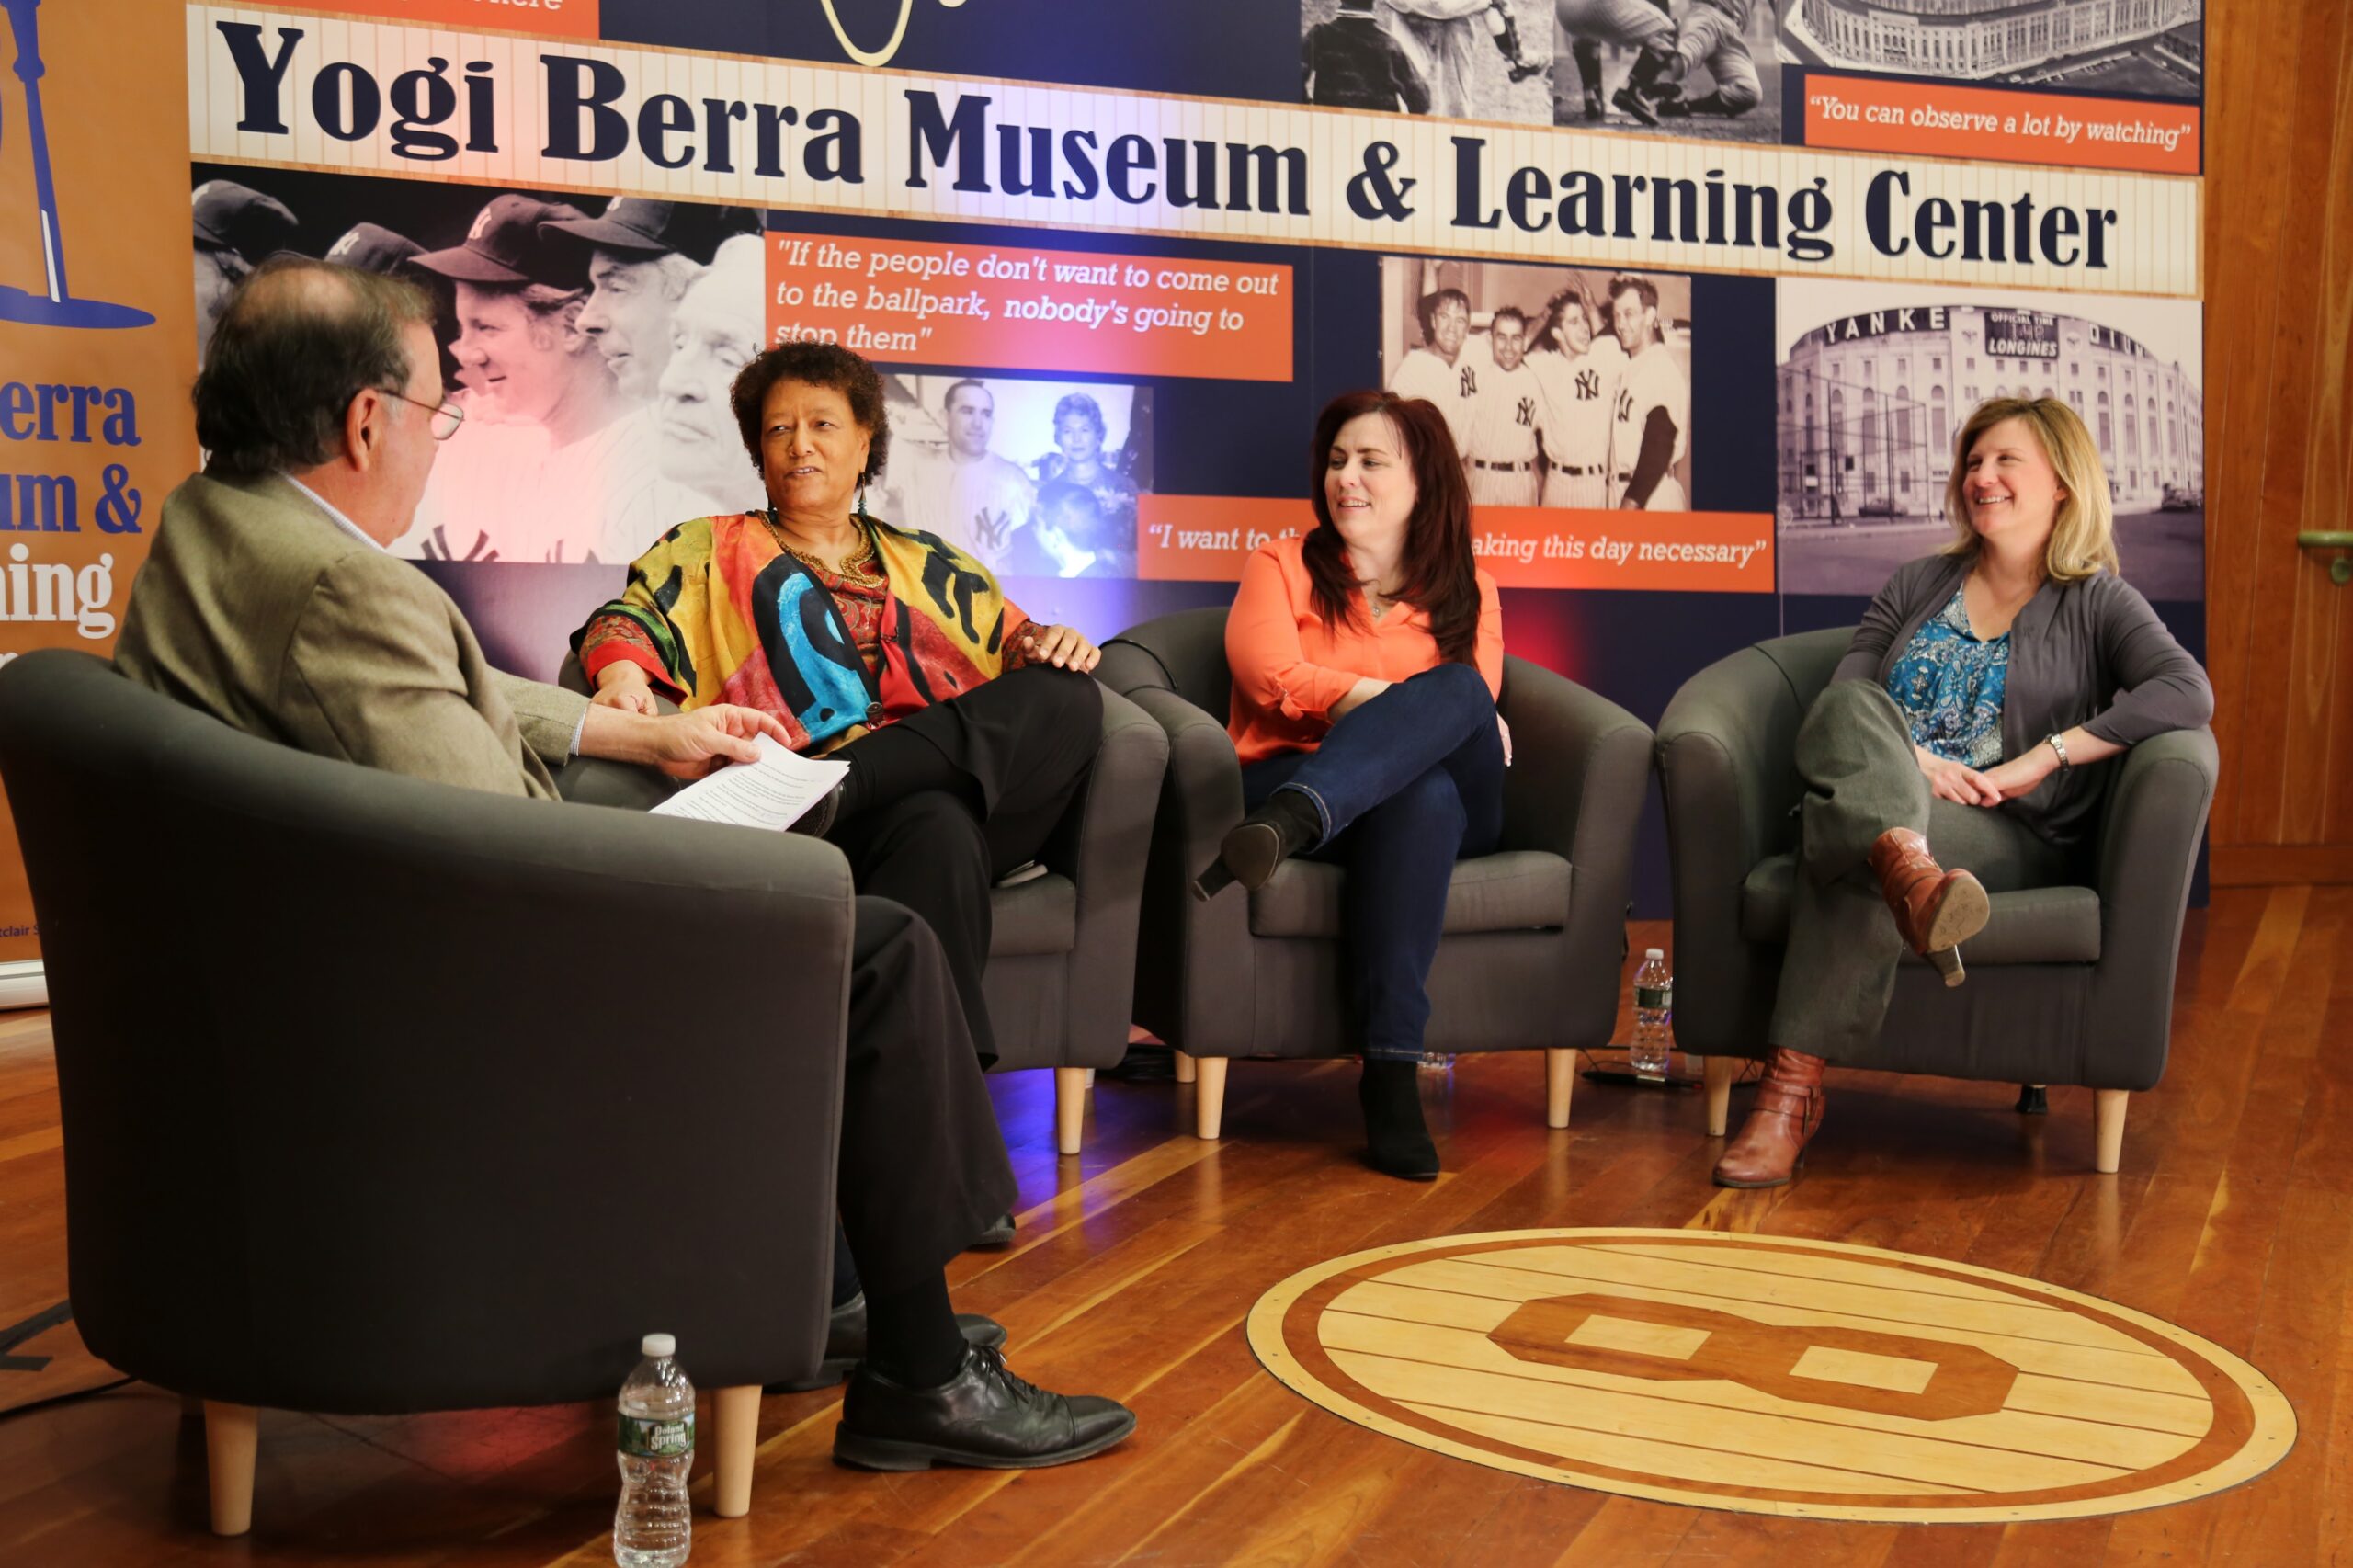 Rentals - Yogi Berra Museum & Learning Center